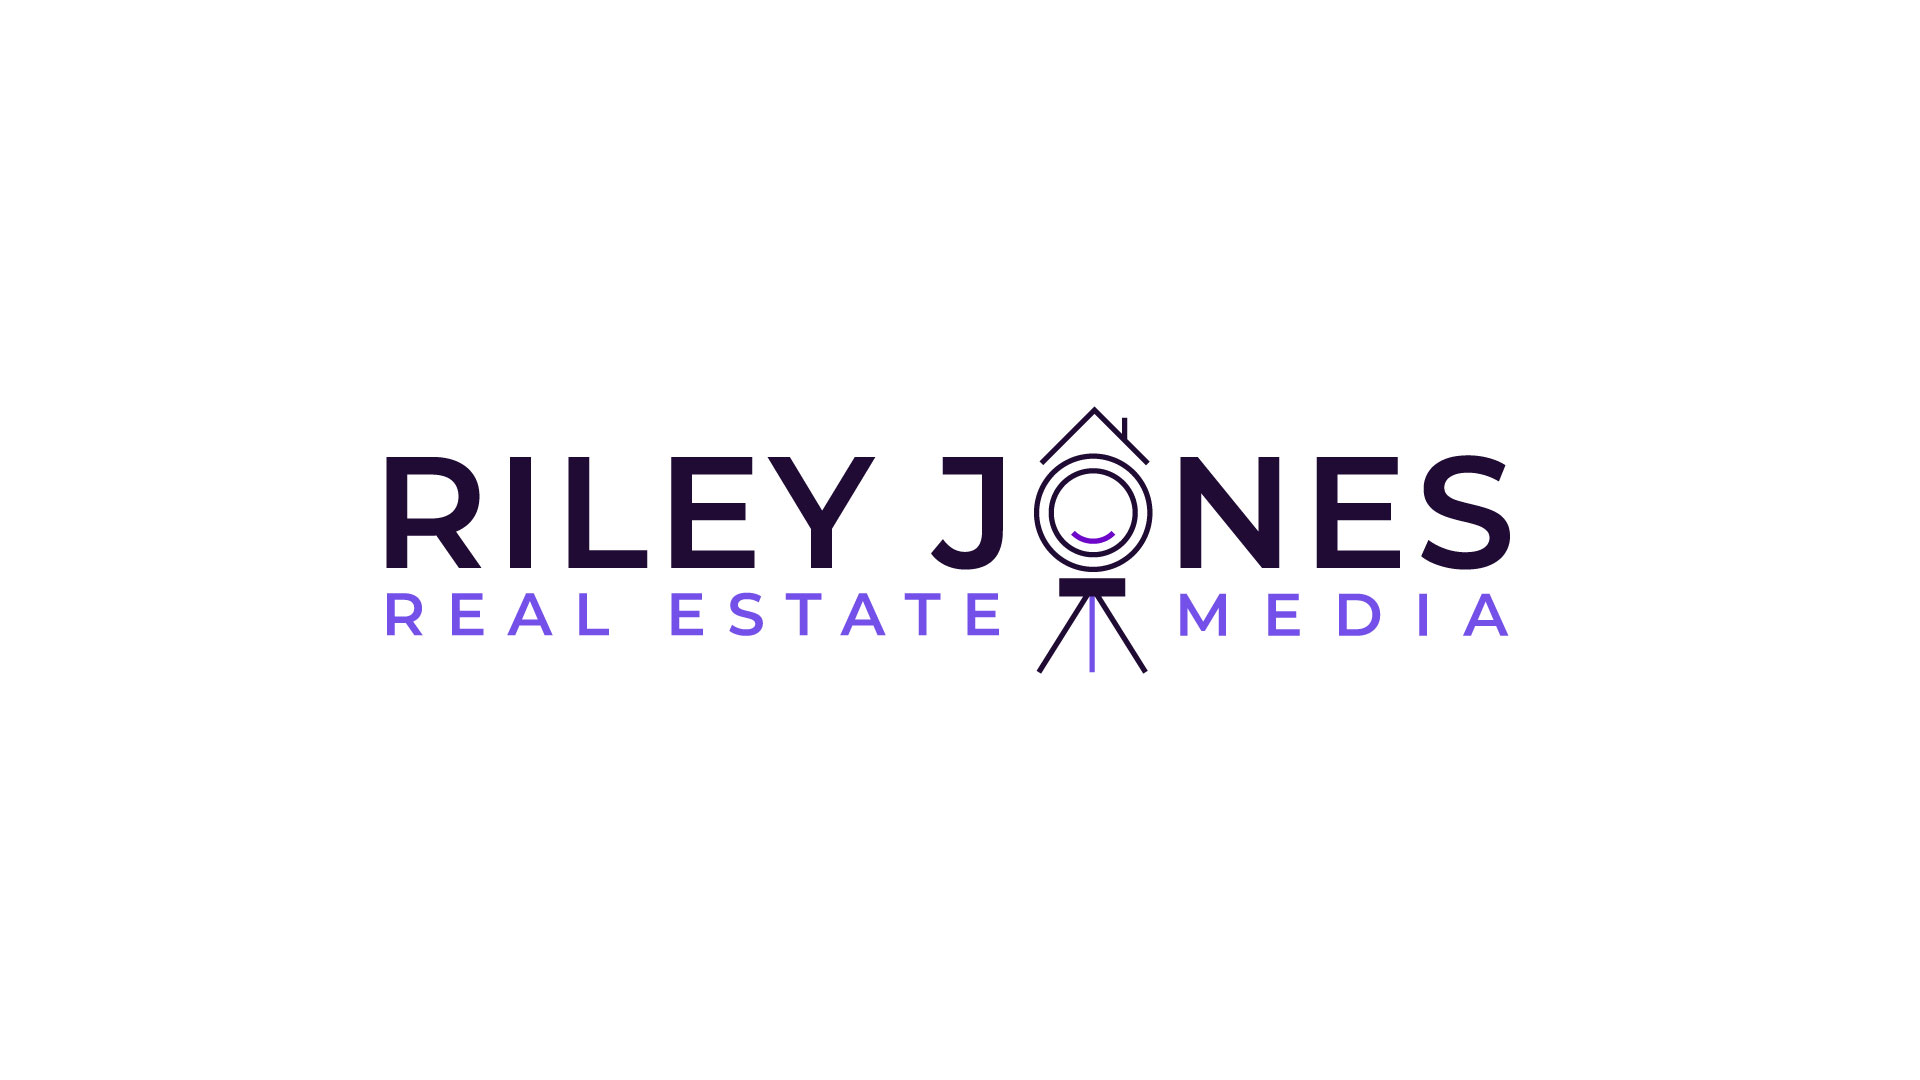 Riley Jones Real Estate Media